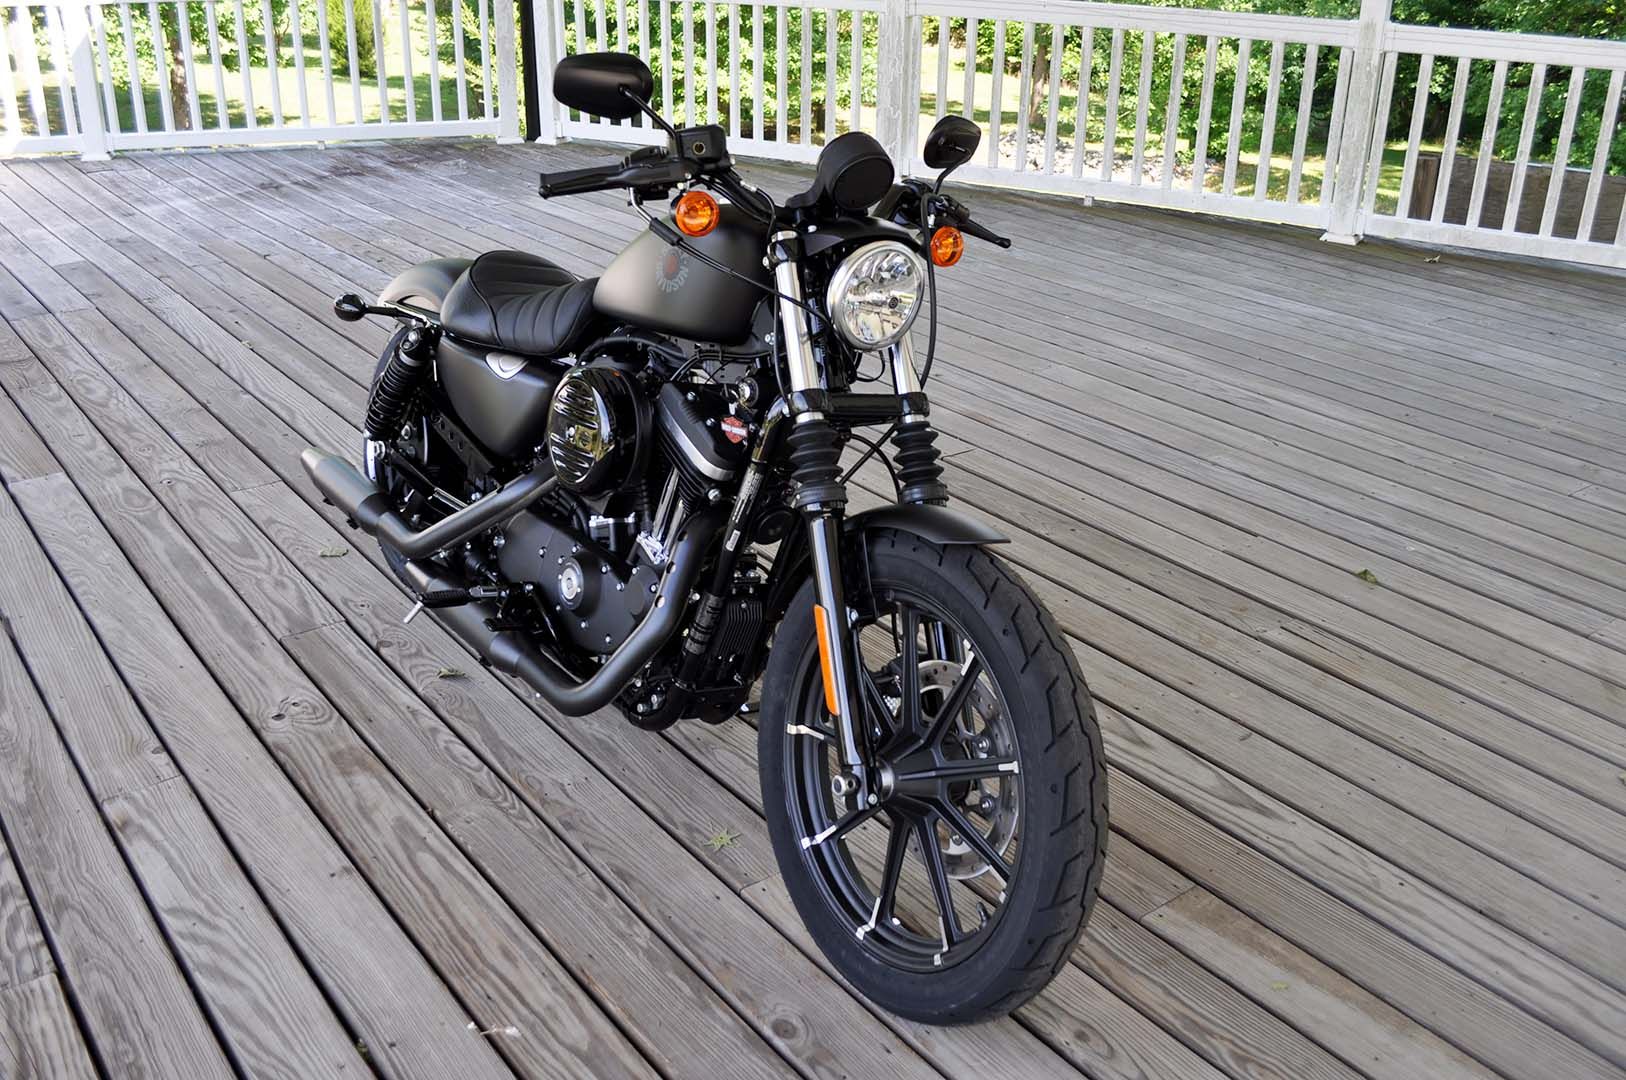 2022 Harley-Davidson Iron 883™ in Winston Salem, North Carolina - Photo 9